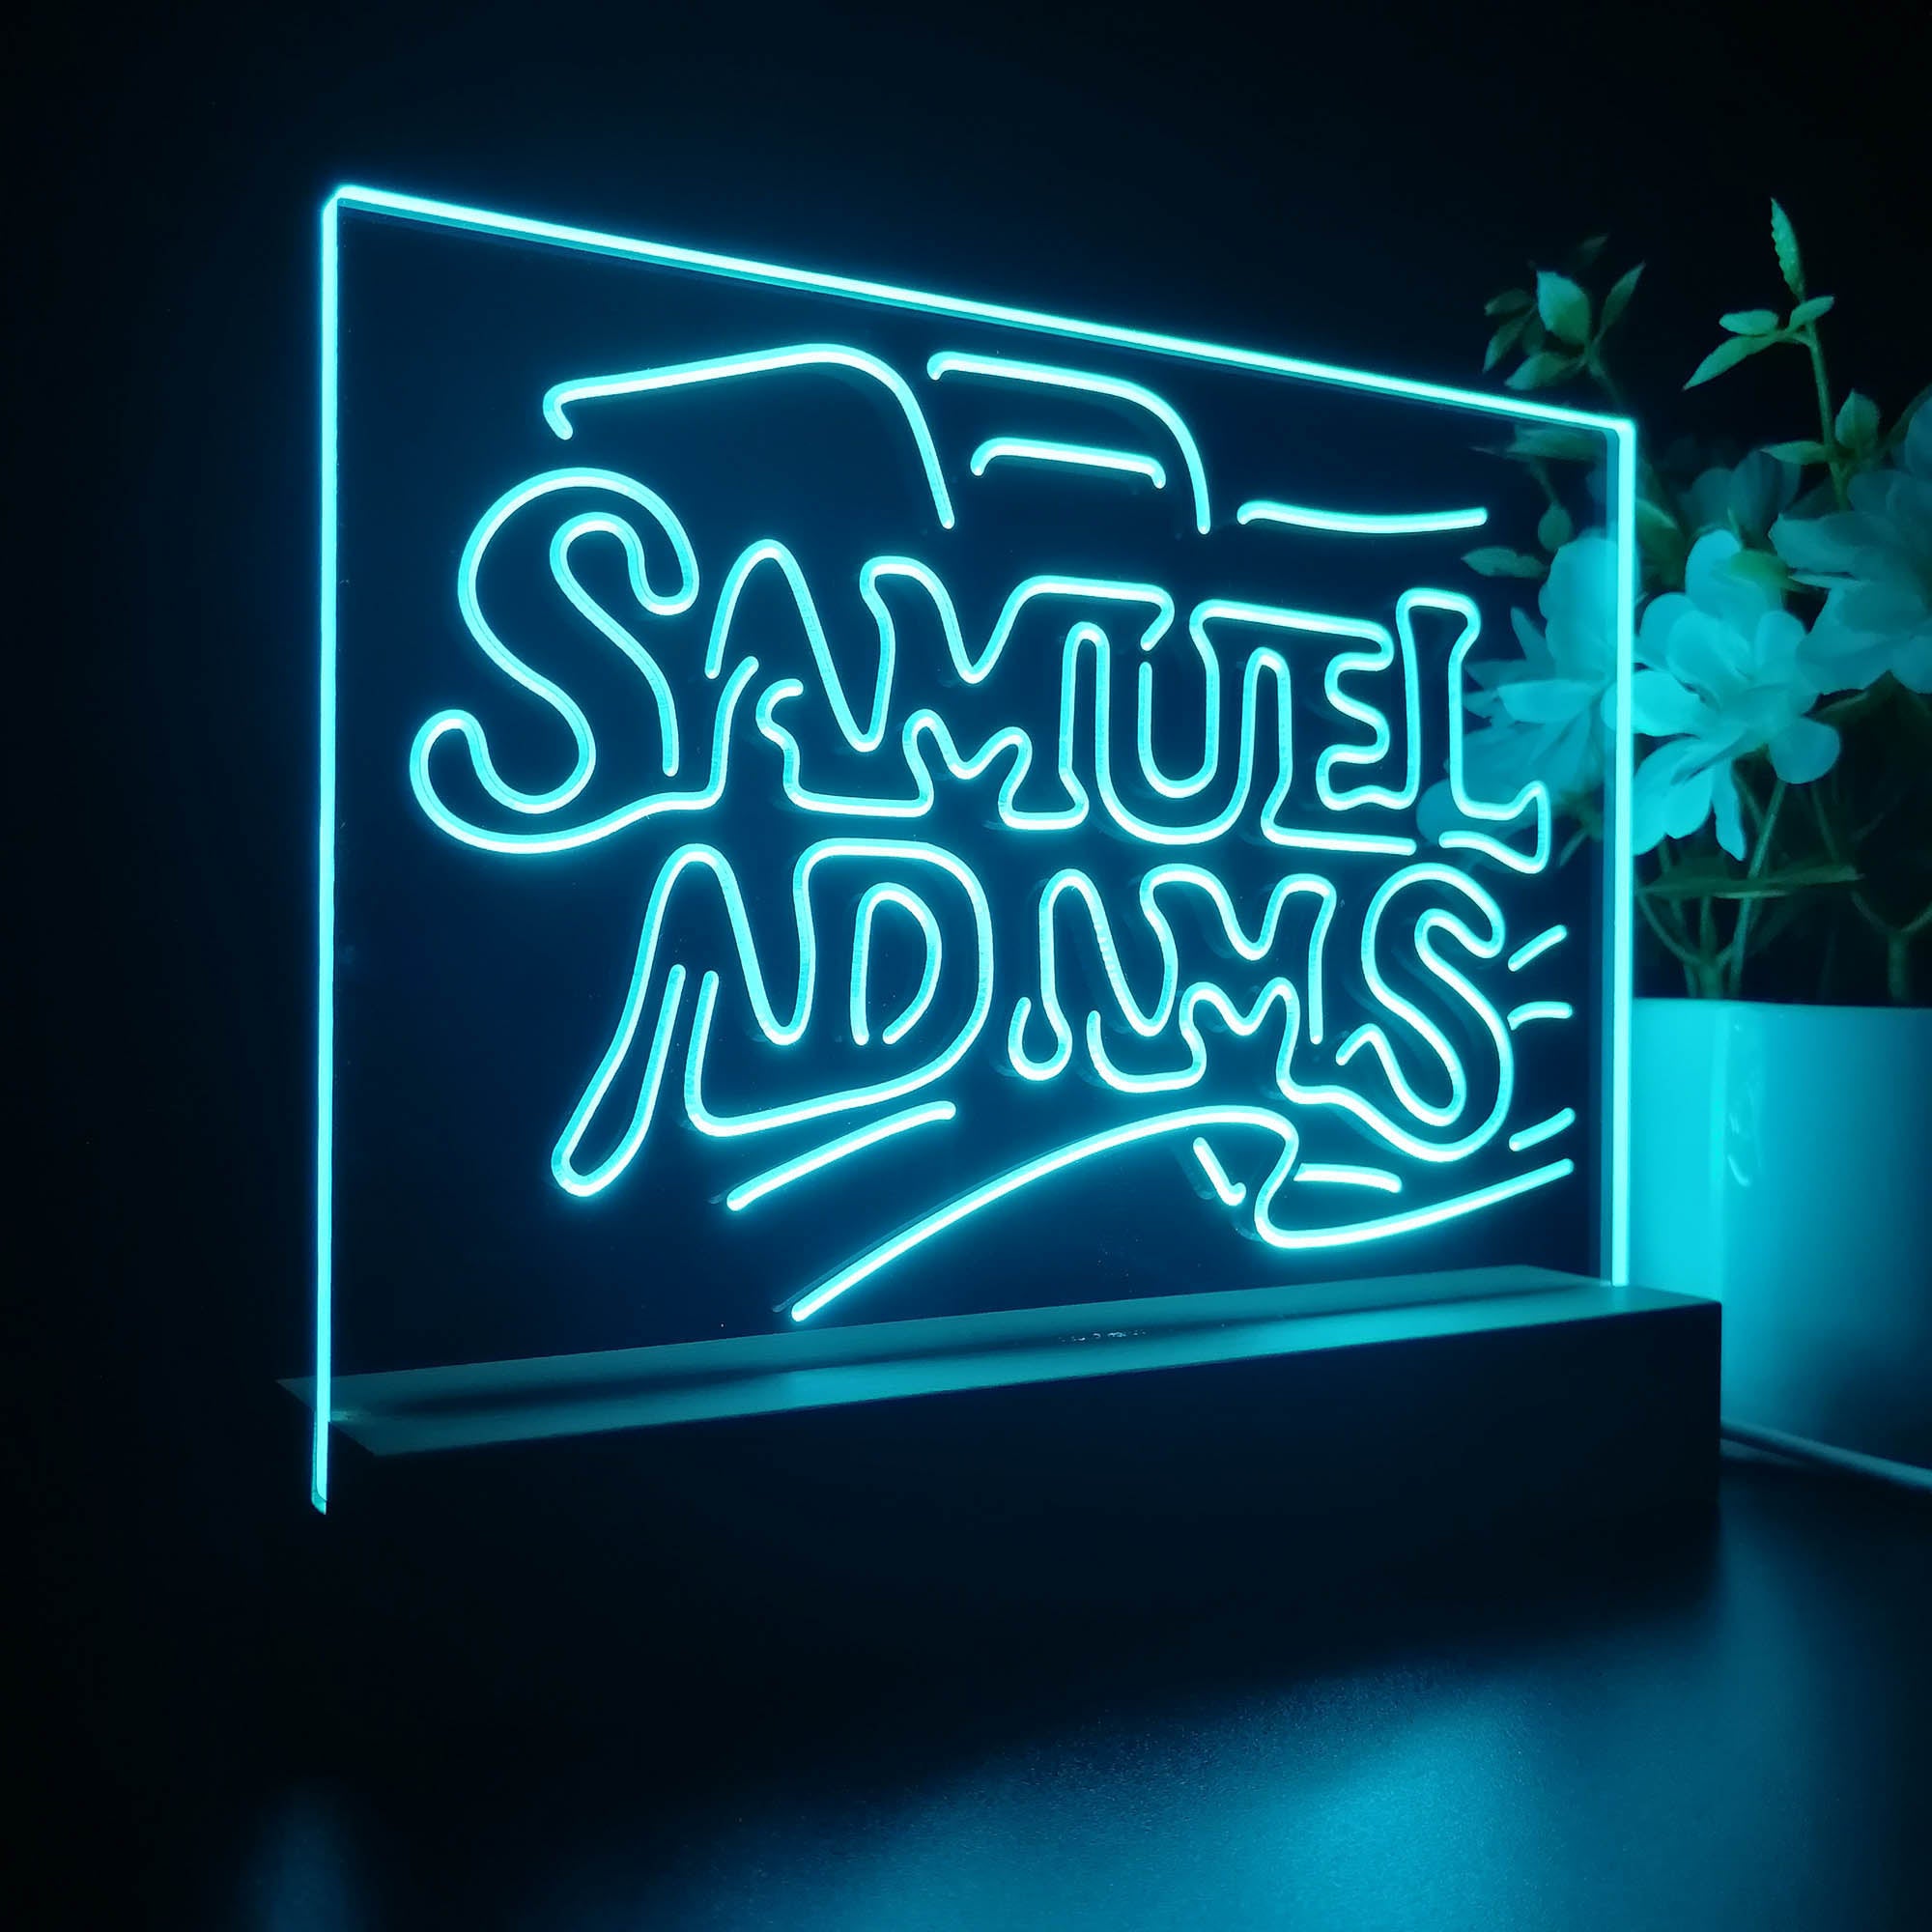 Samuel Adams Beer Bar Night Light 3D Illusion Lamp Home Bar Decor